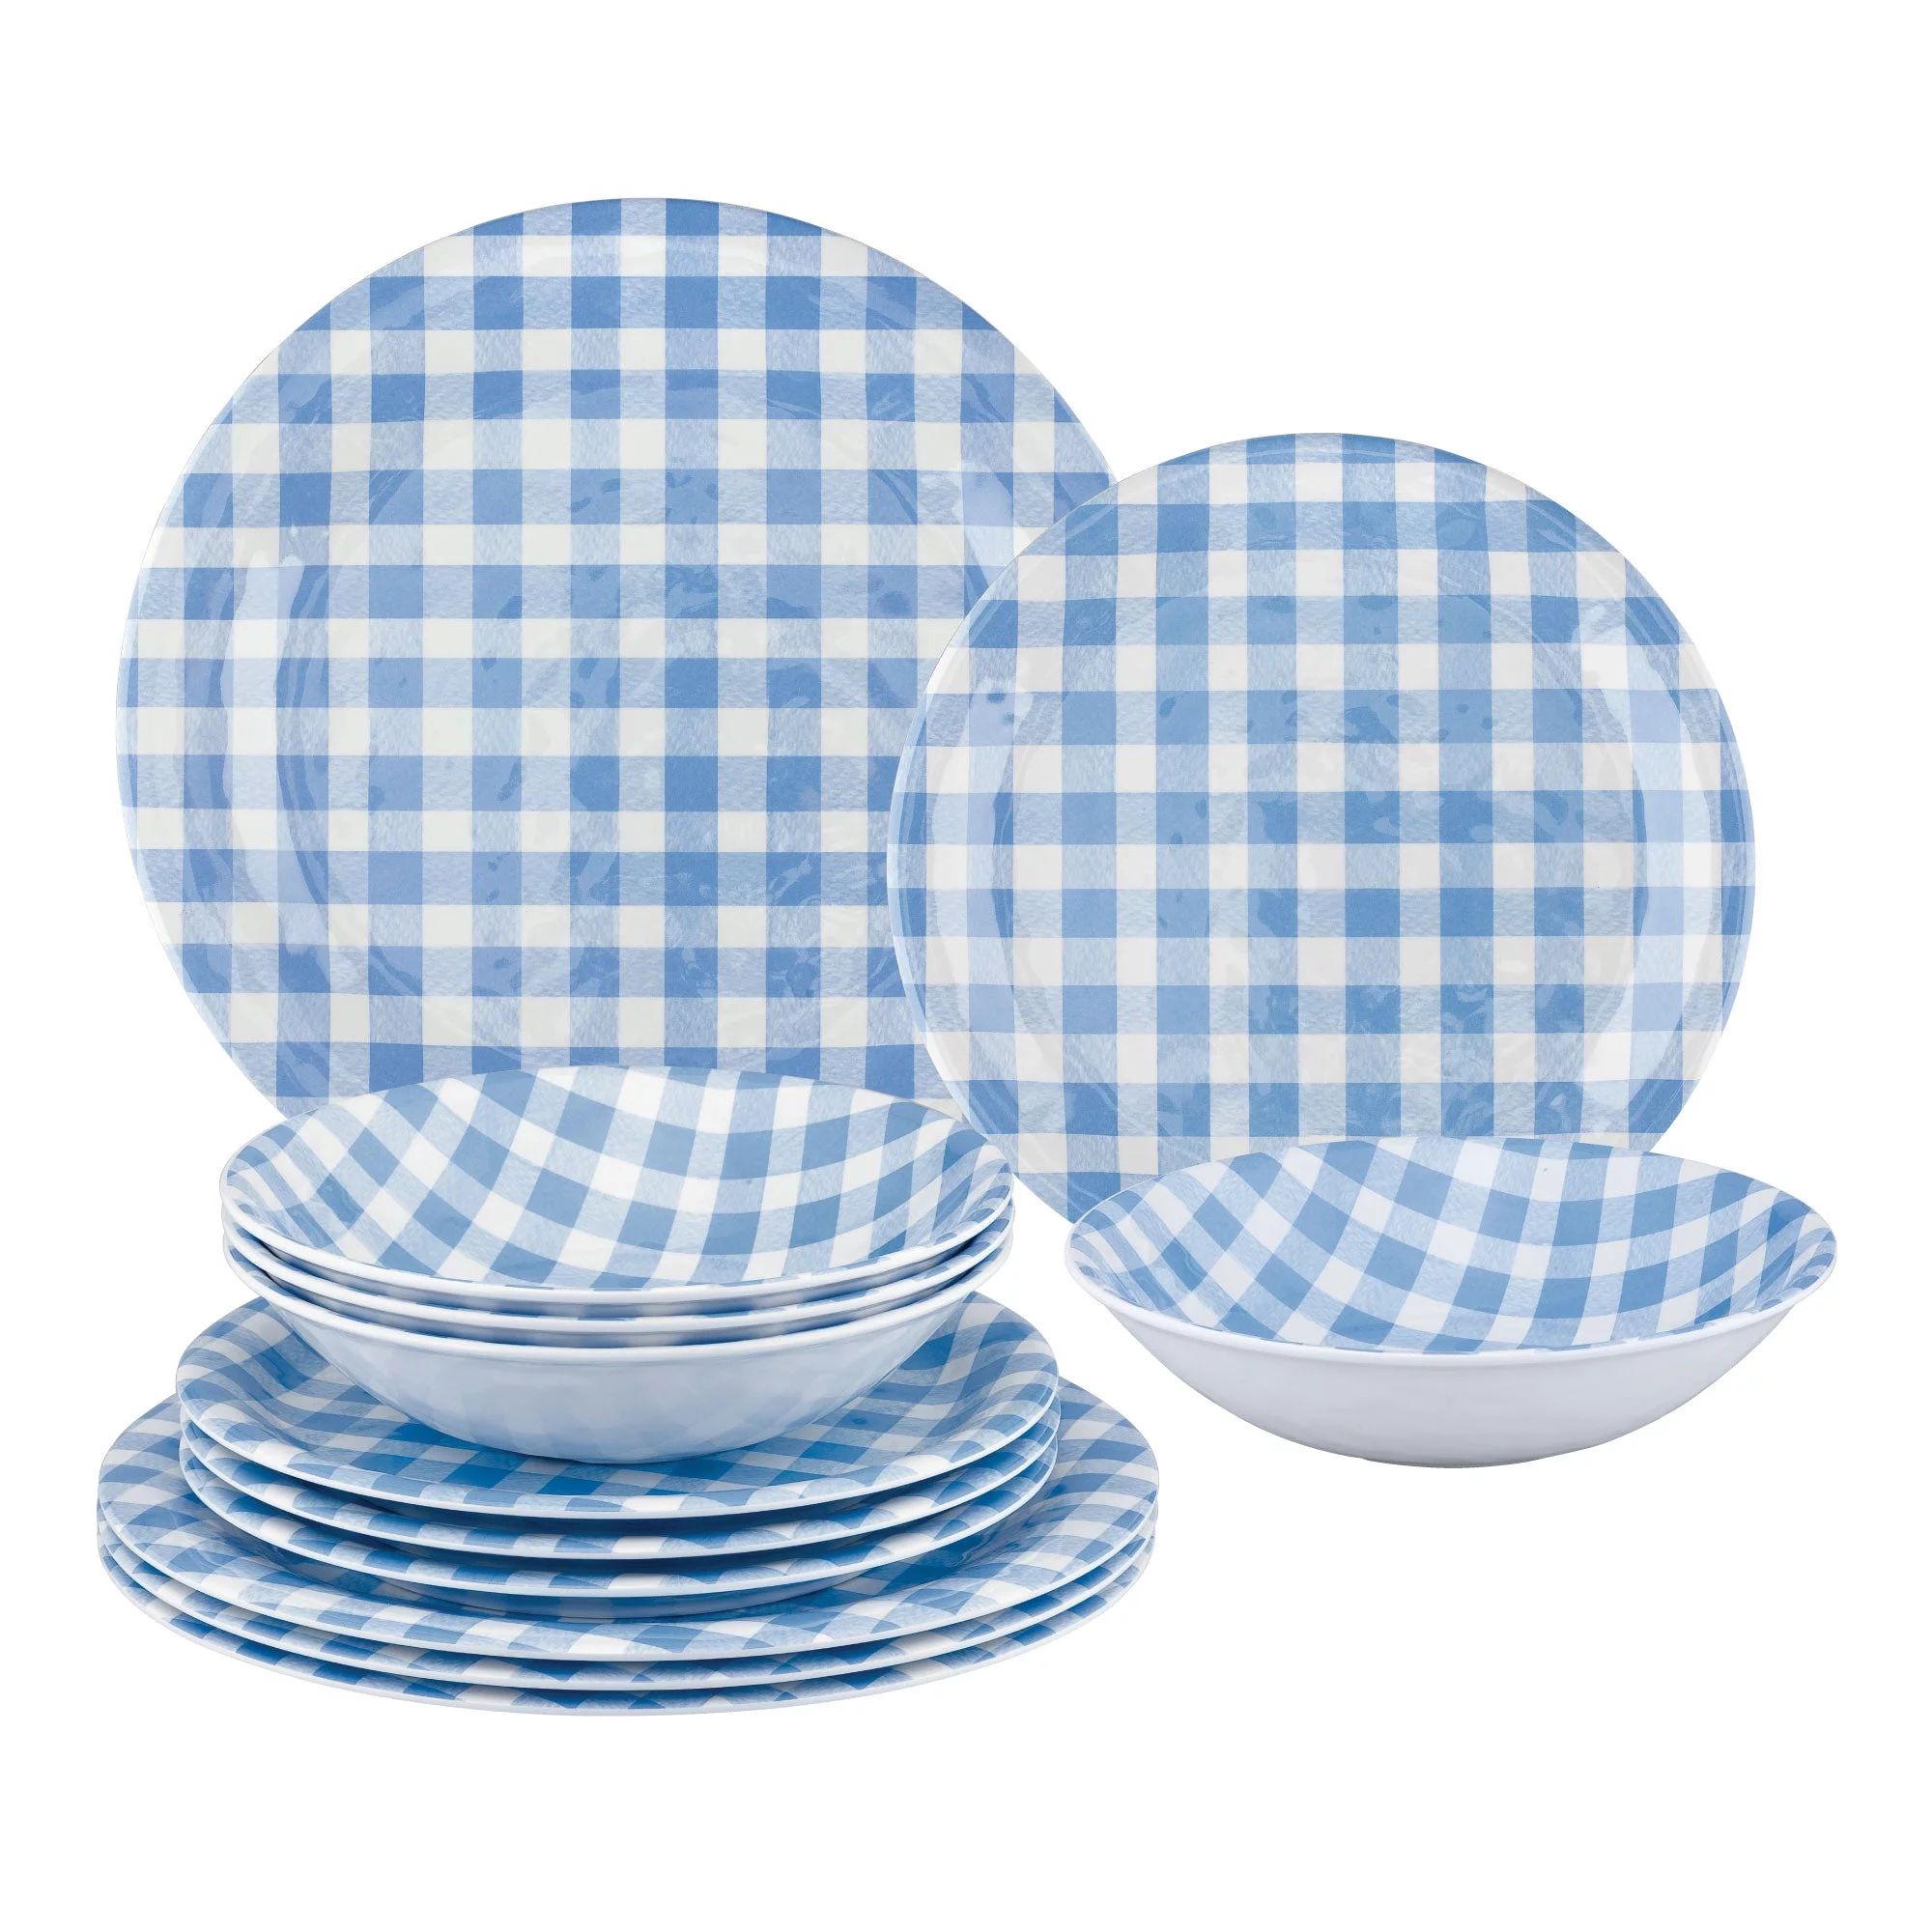 Gourmet Art 12-Piece Melamine Dinnerware Set, Includes Dinner Plates, Salad Plates, Bowls, Servic... | Walmart (US)